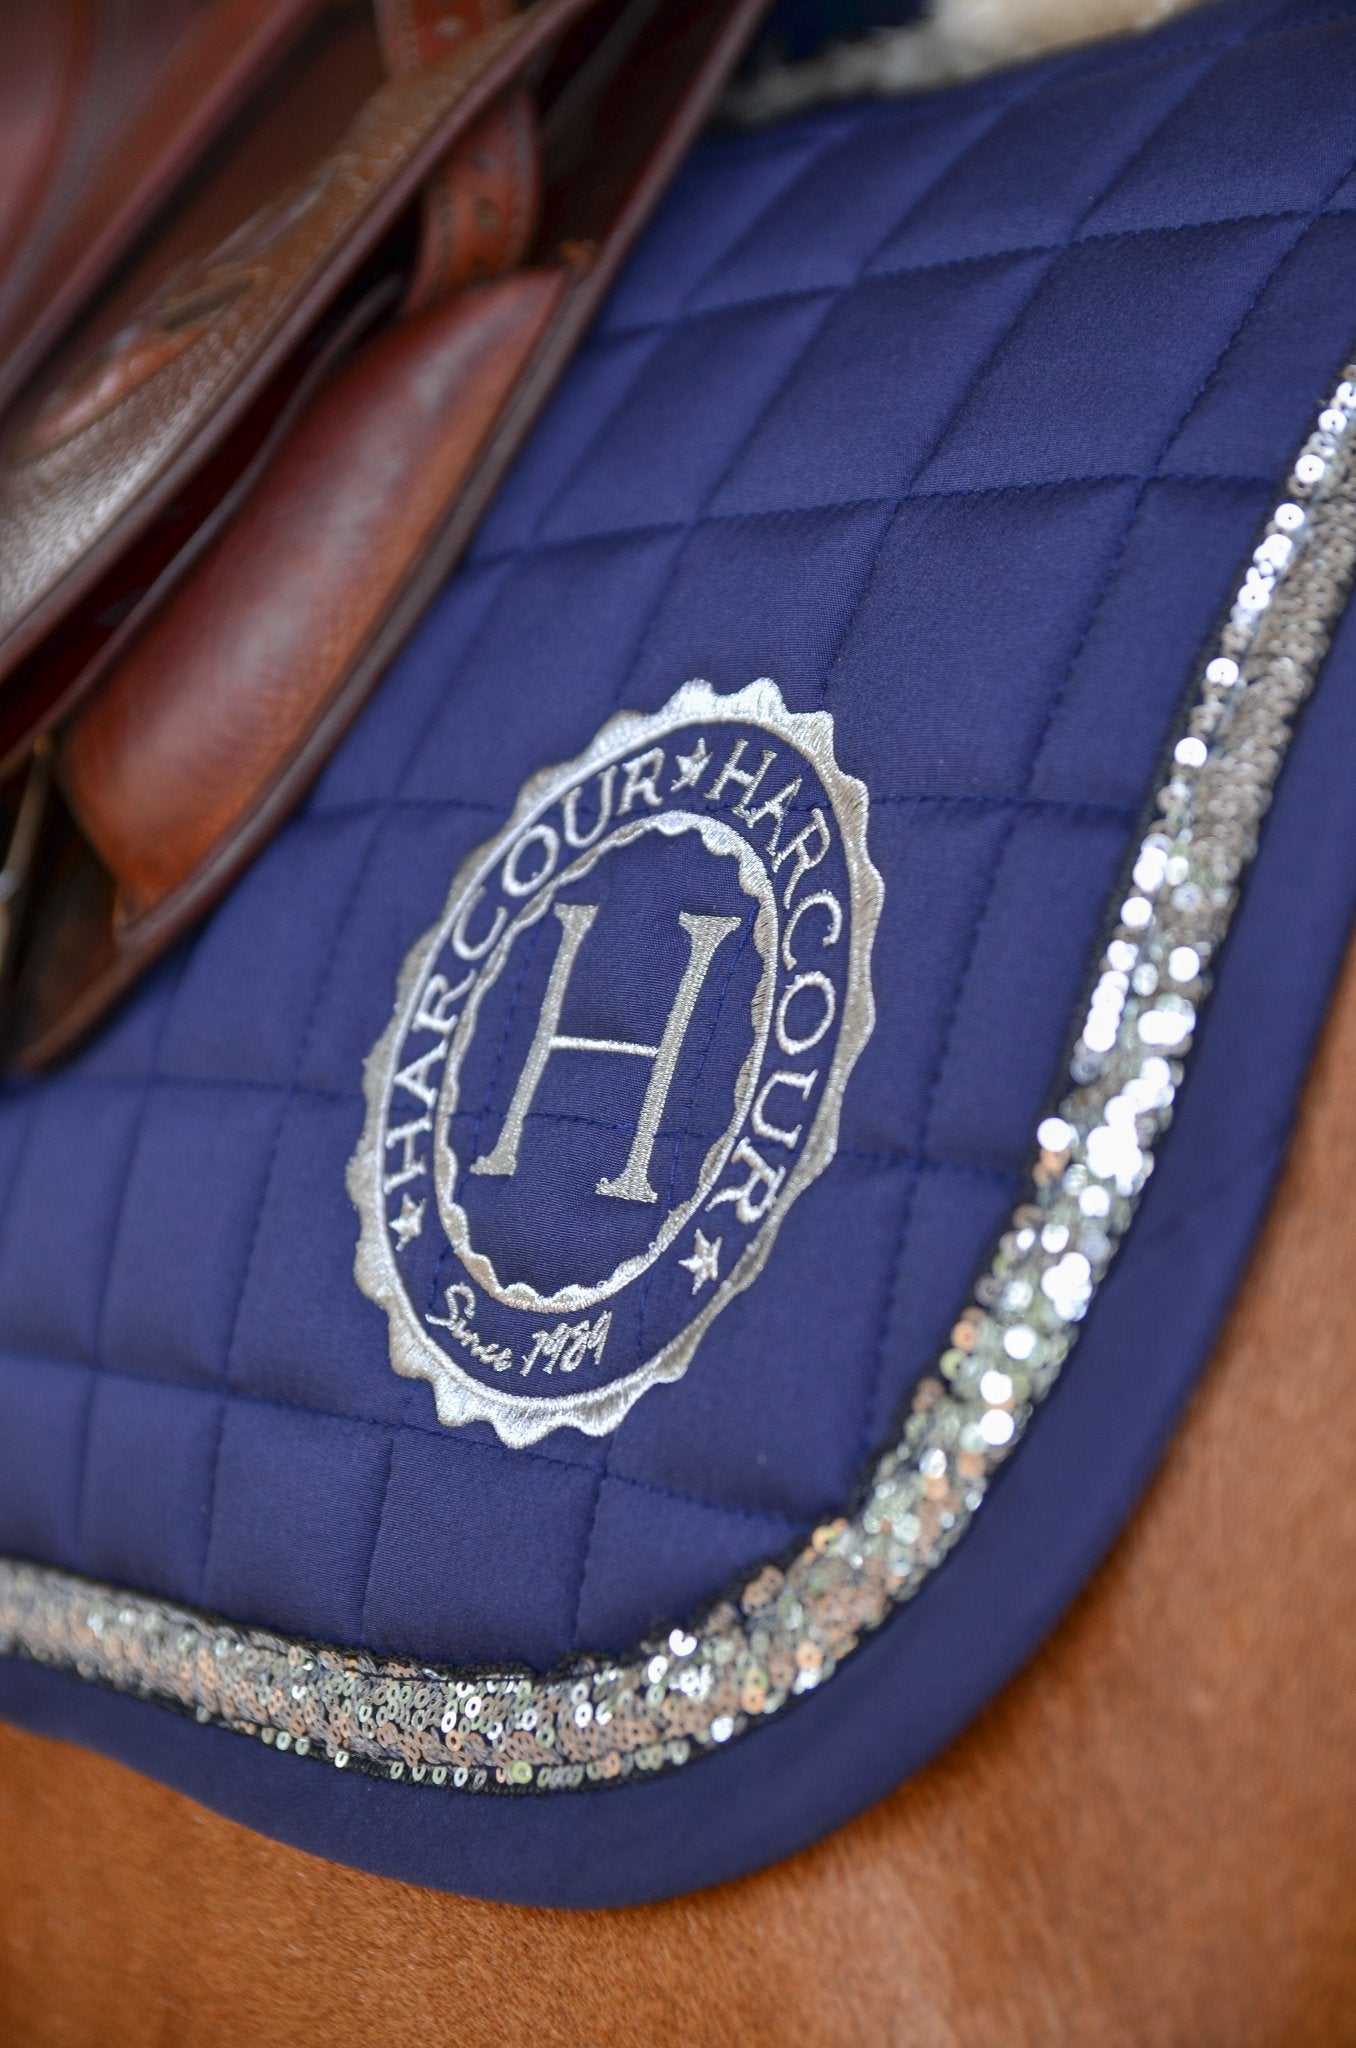 HENRY equestrian - Harcour - Υποσάγμα dressage Sarkle navy